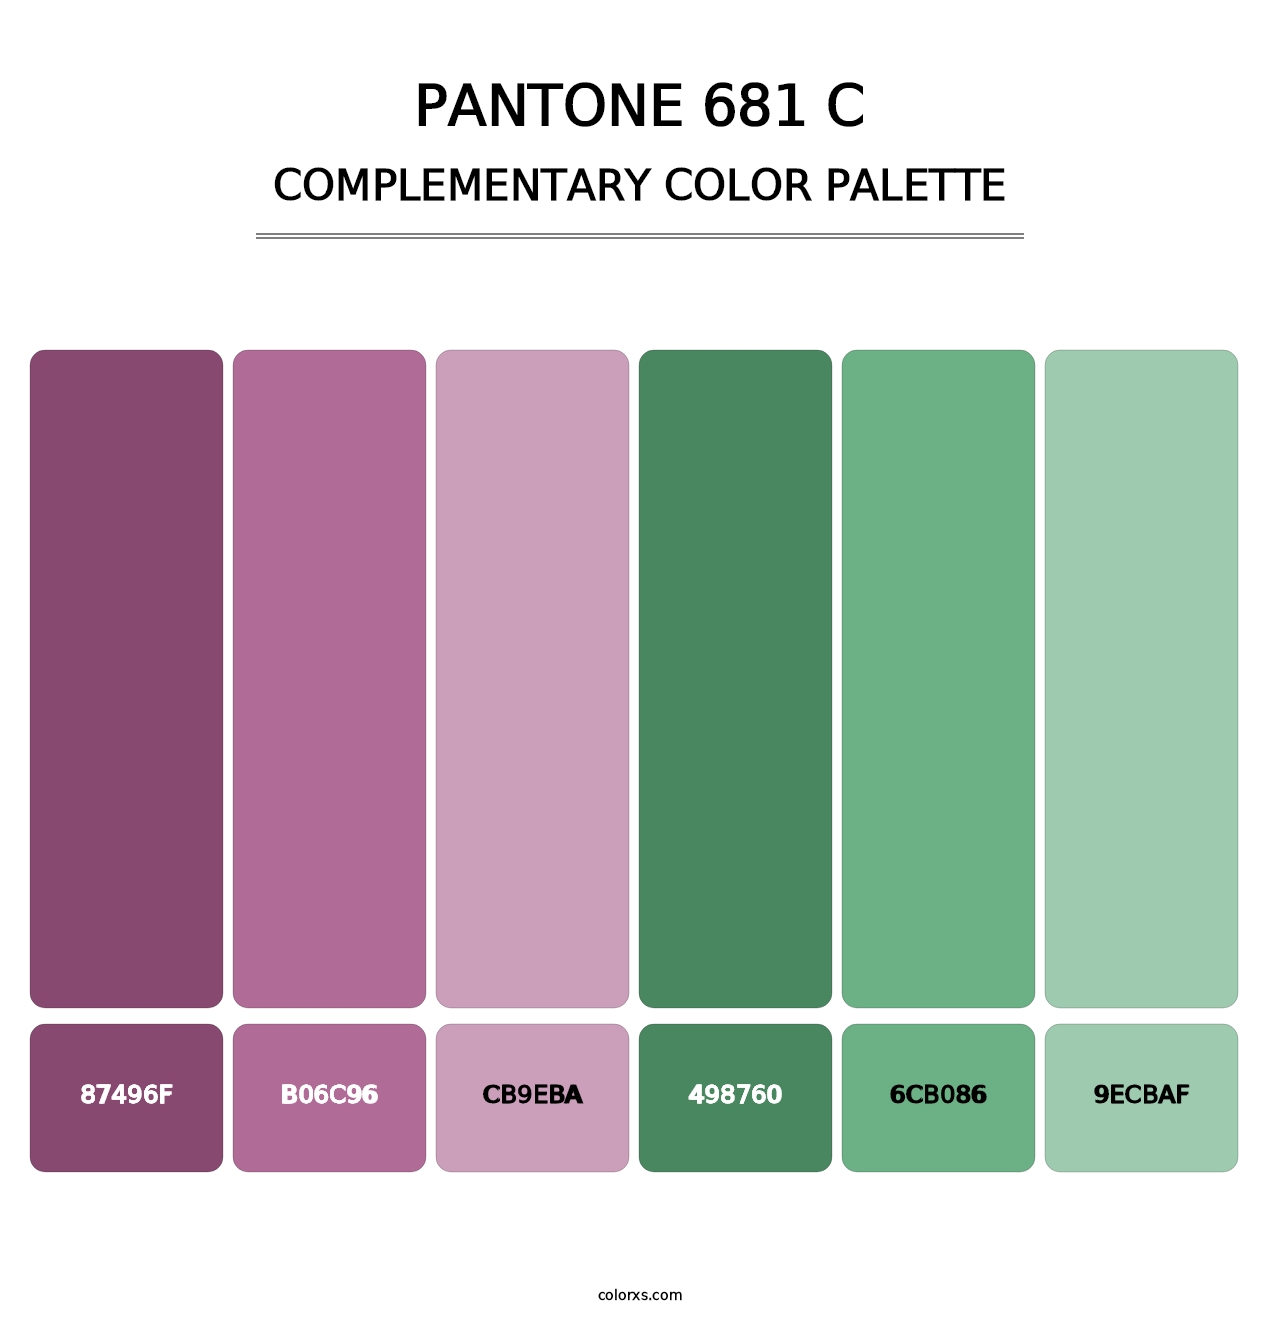 PANTONE 681 C - Complementary Color Palette